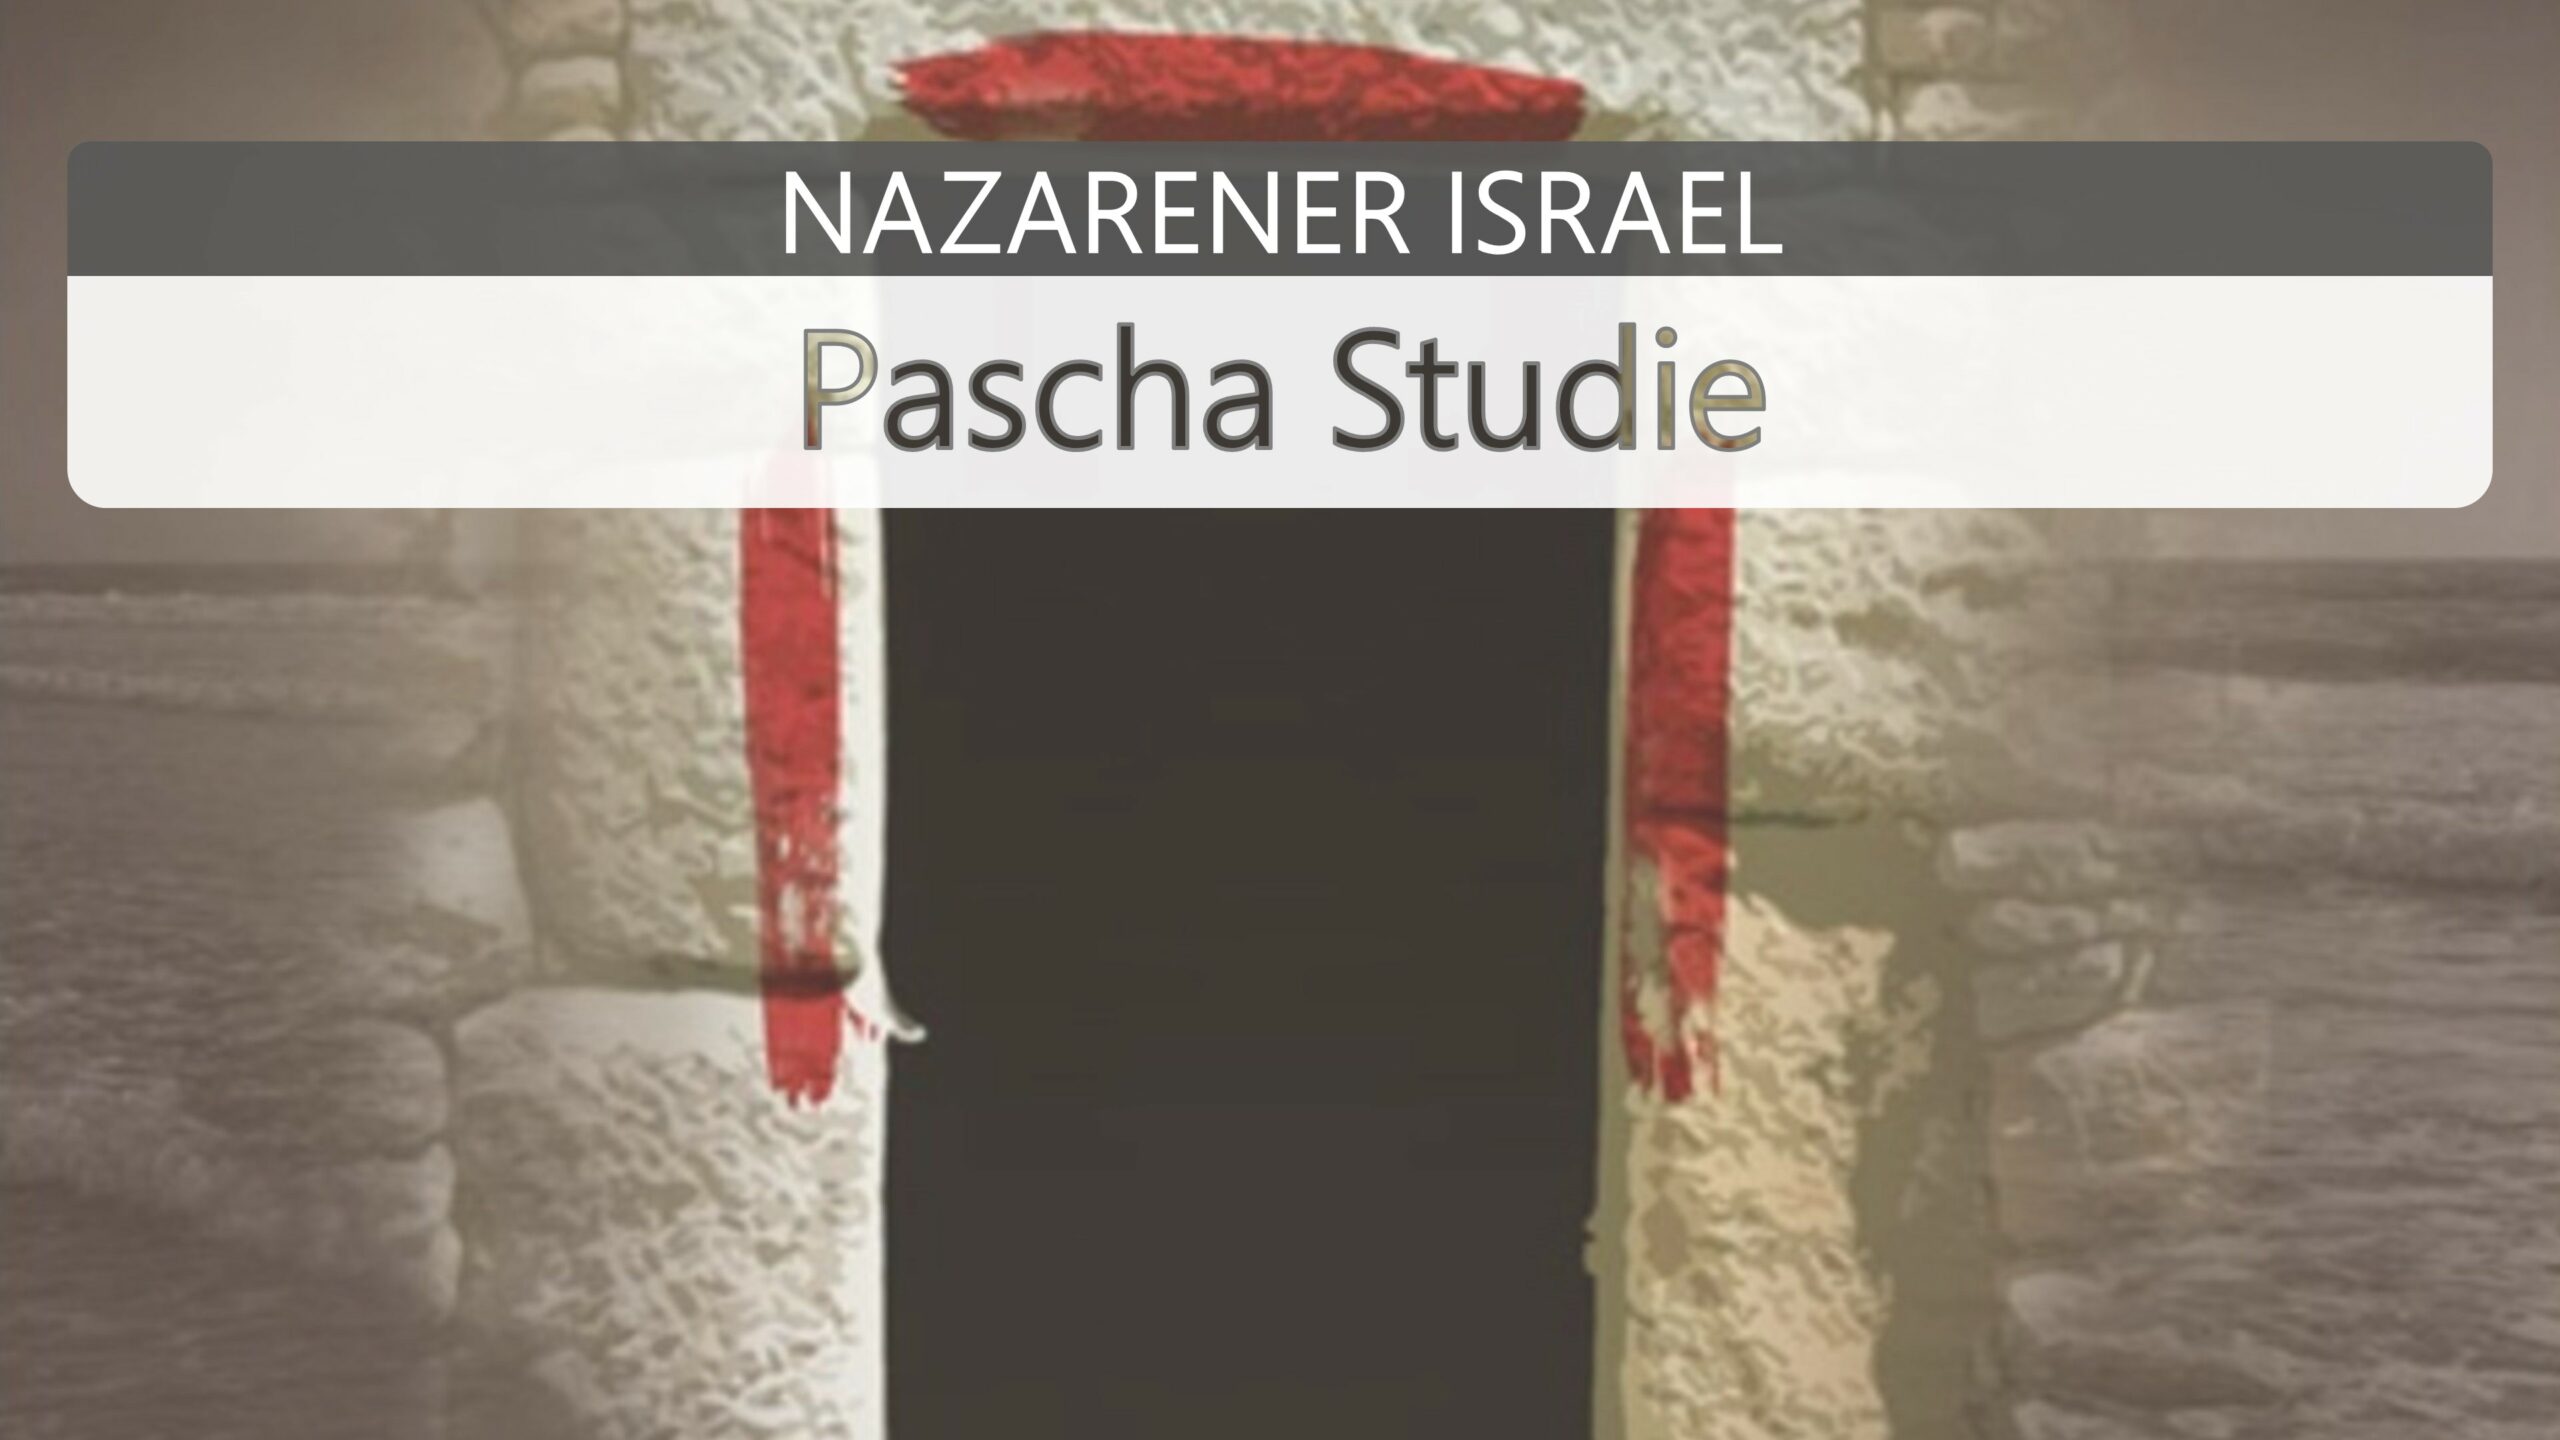 Nazarene Israël Pascha Studie